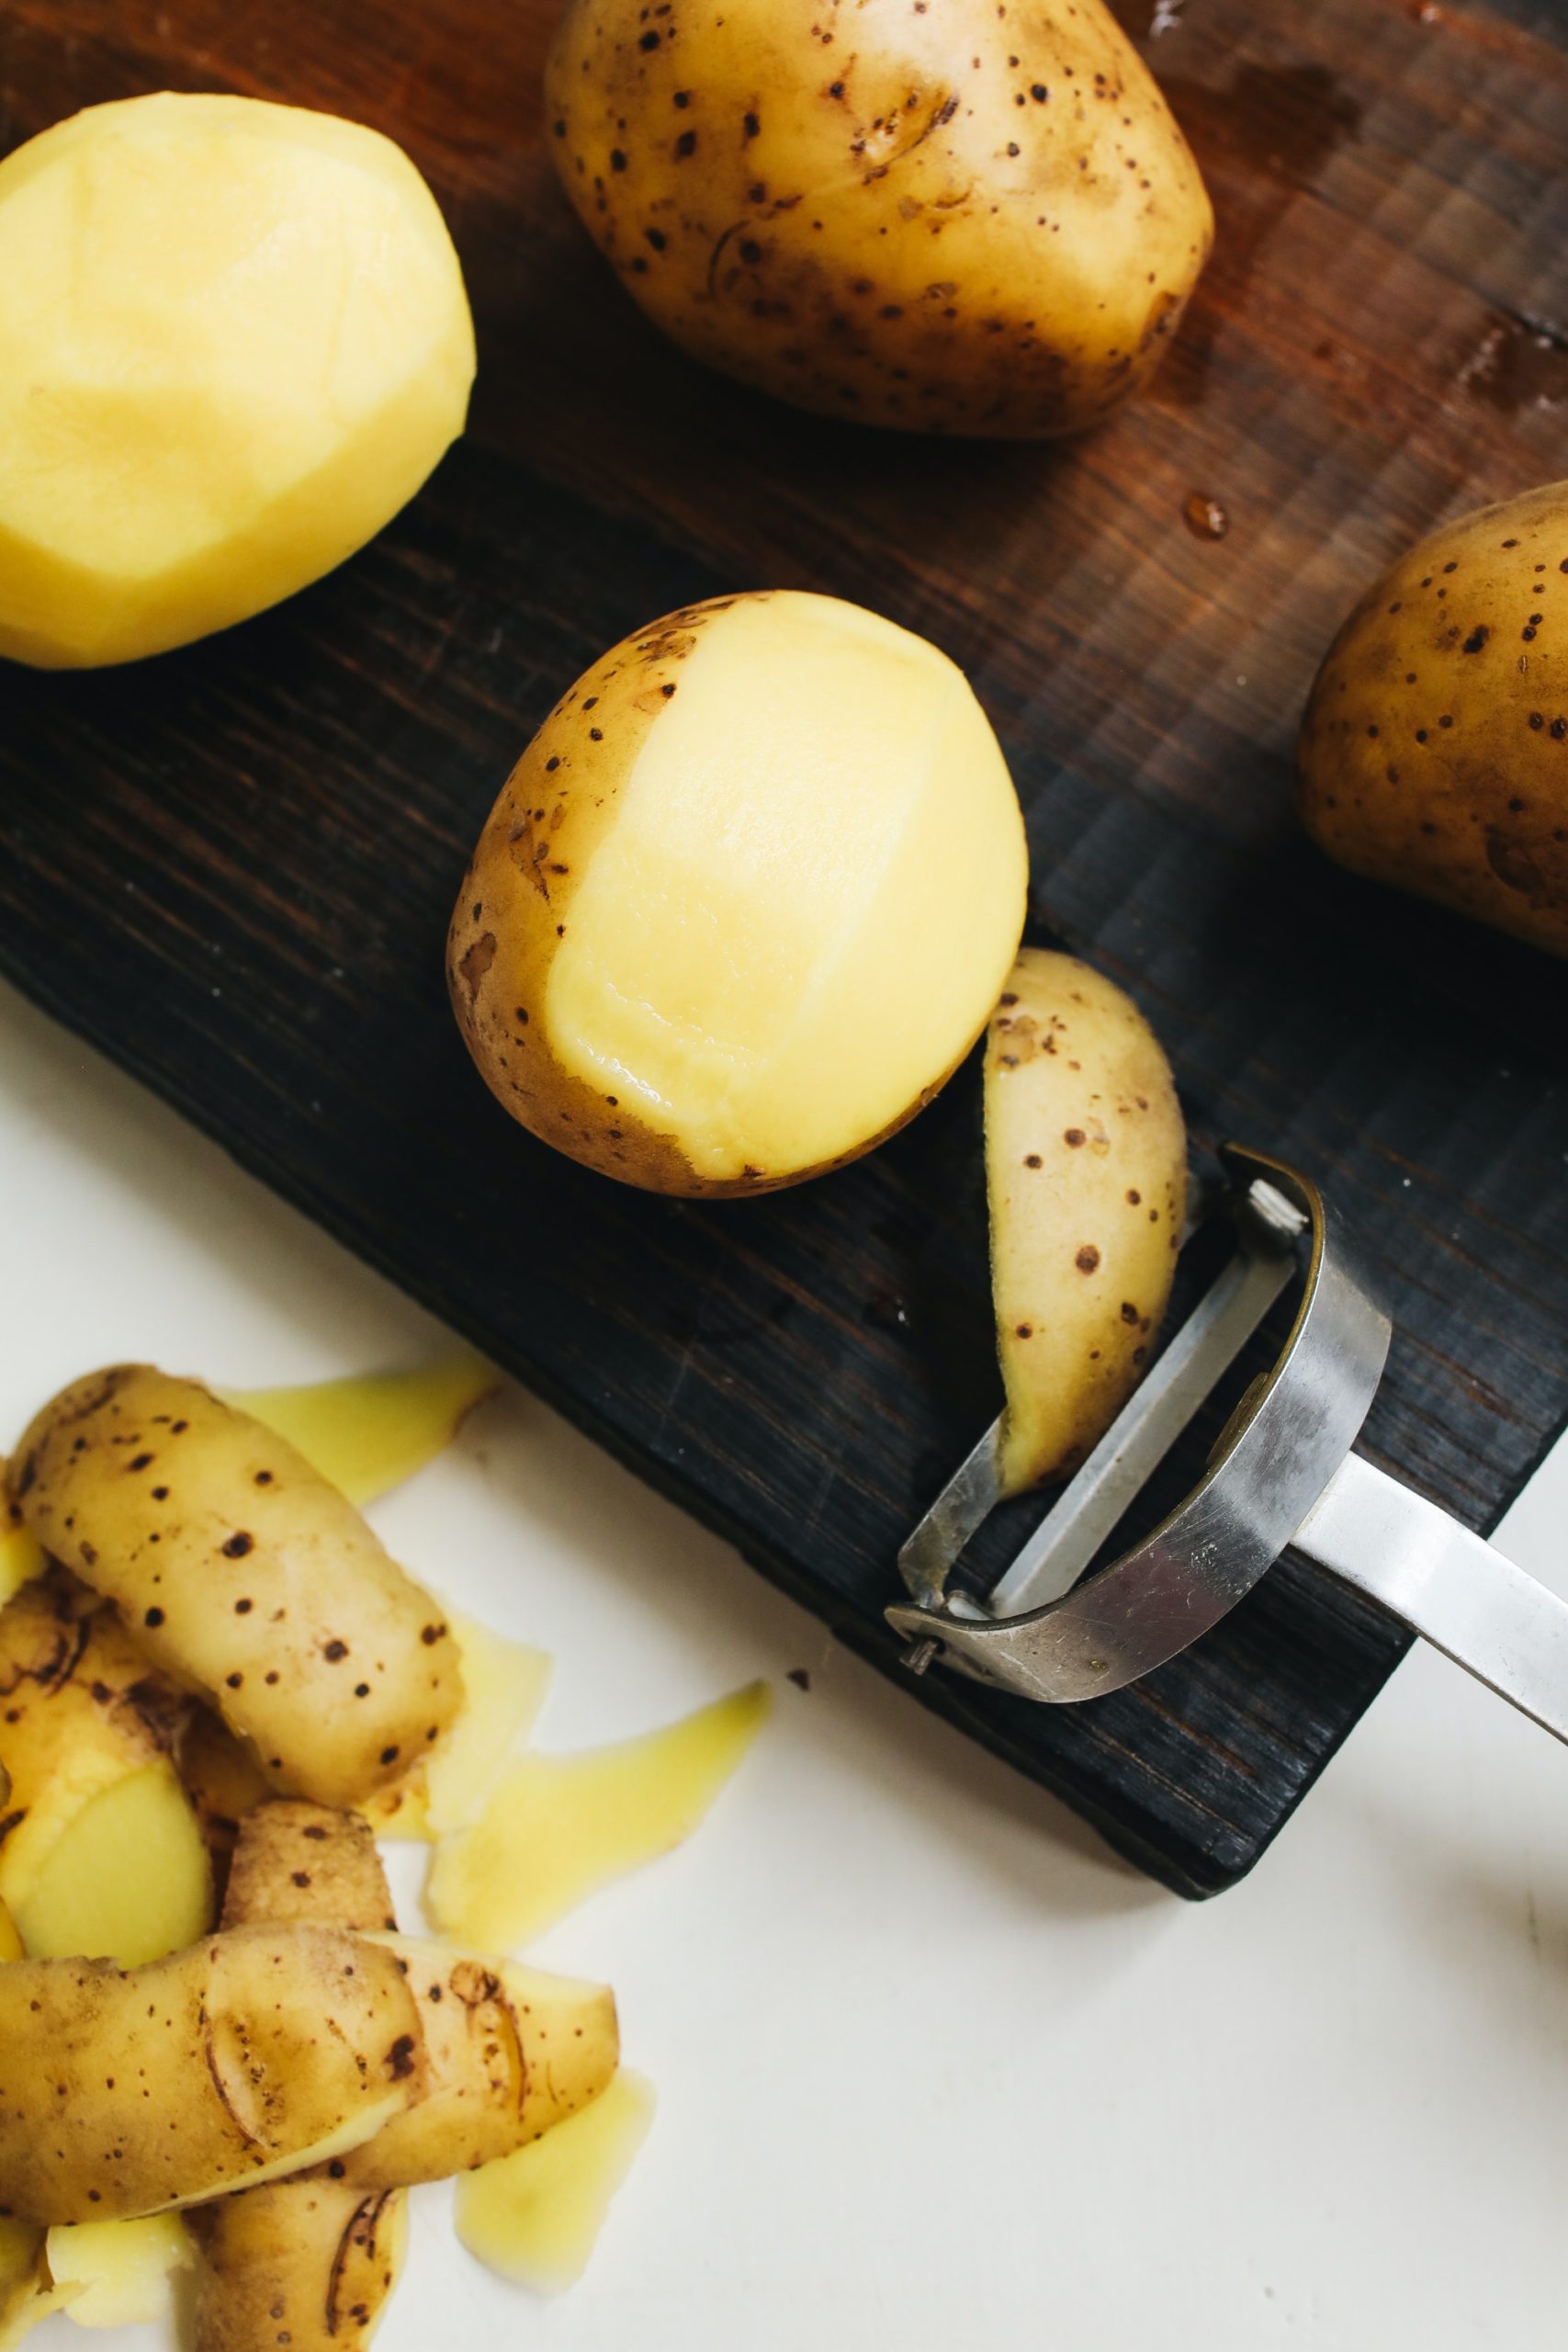 potatoes being peeled